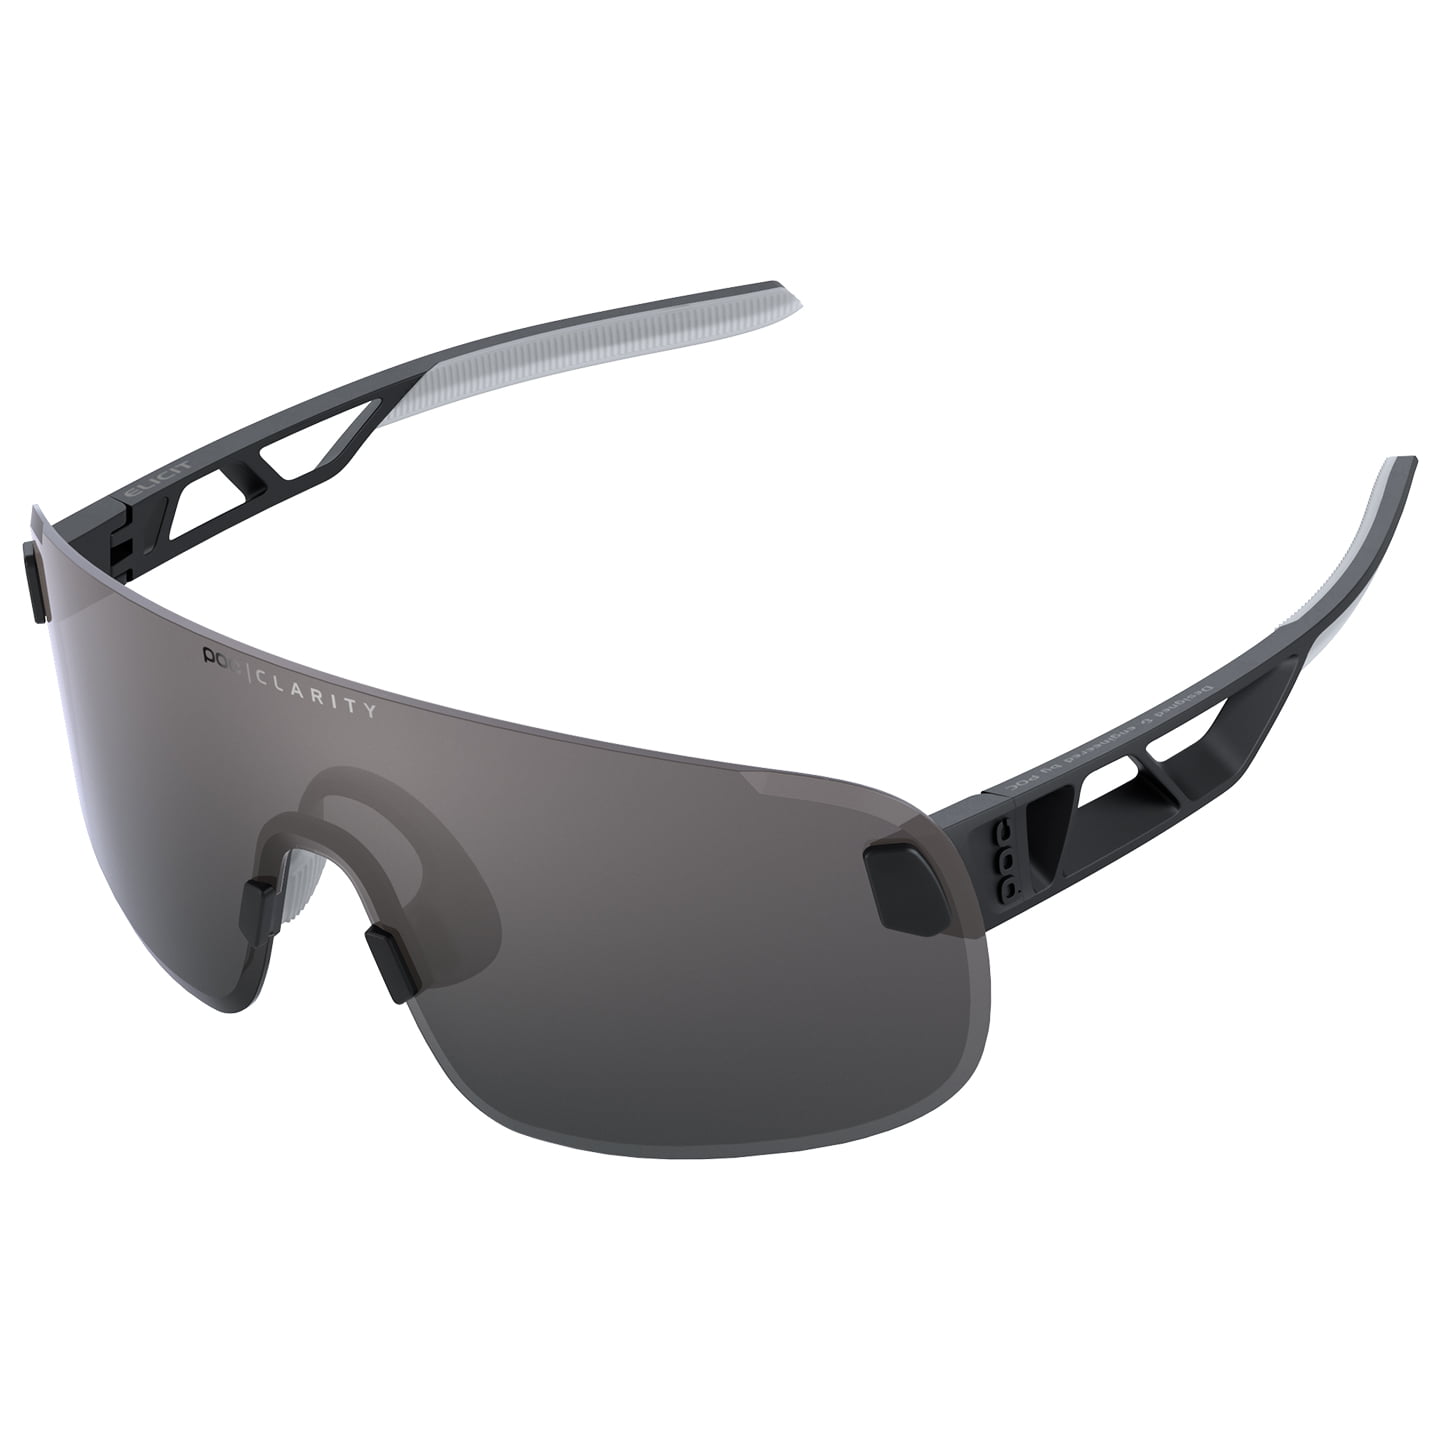 POC Elicit clarity Cycling Eyewear, Unisex (women / men), Cycle glasses, Road bike accessories